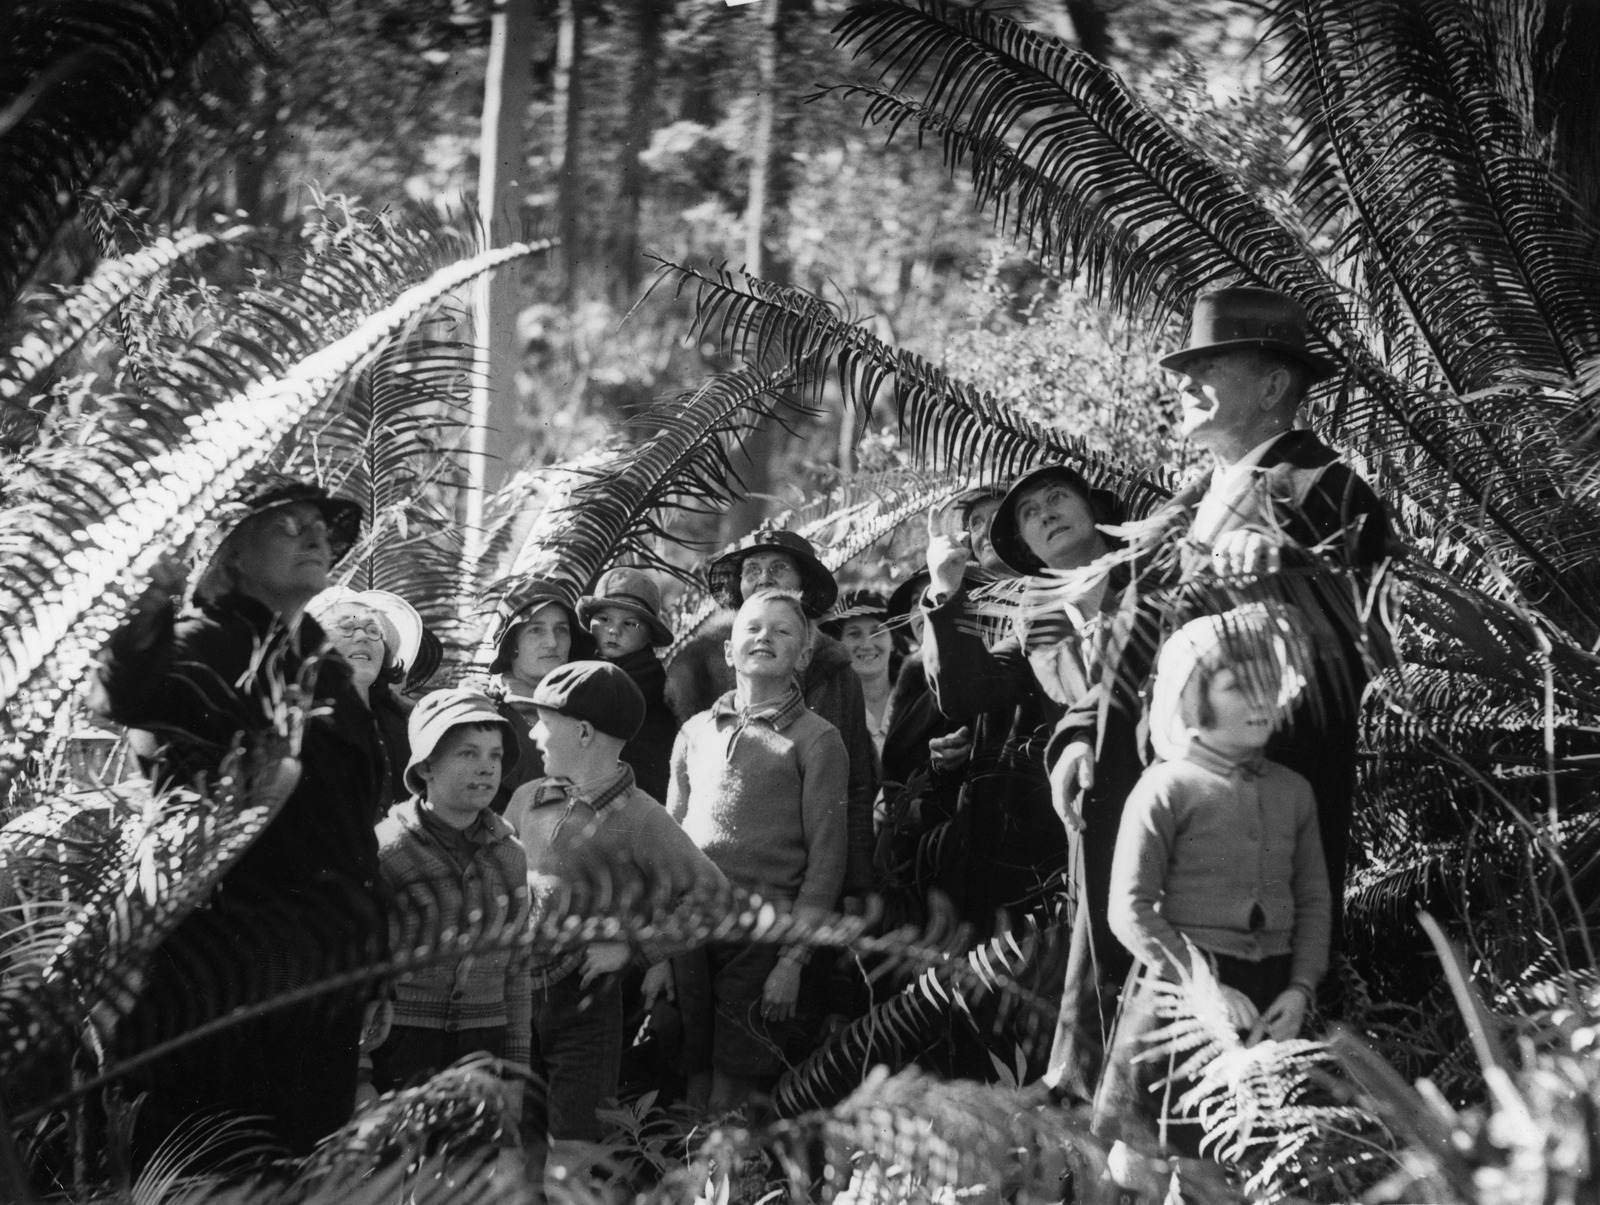  School excursion on Mount Tamborine, 1935